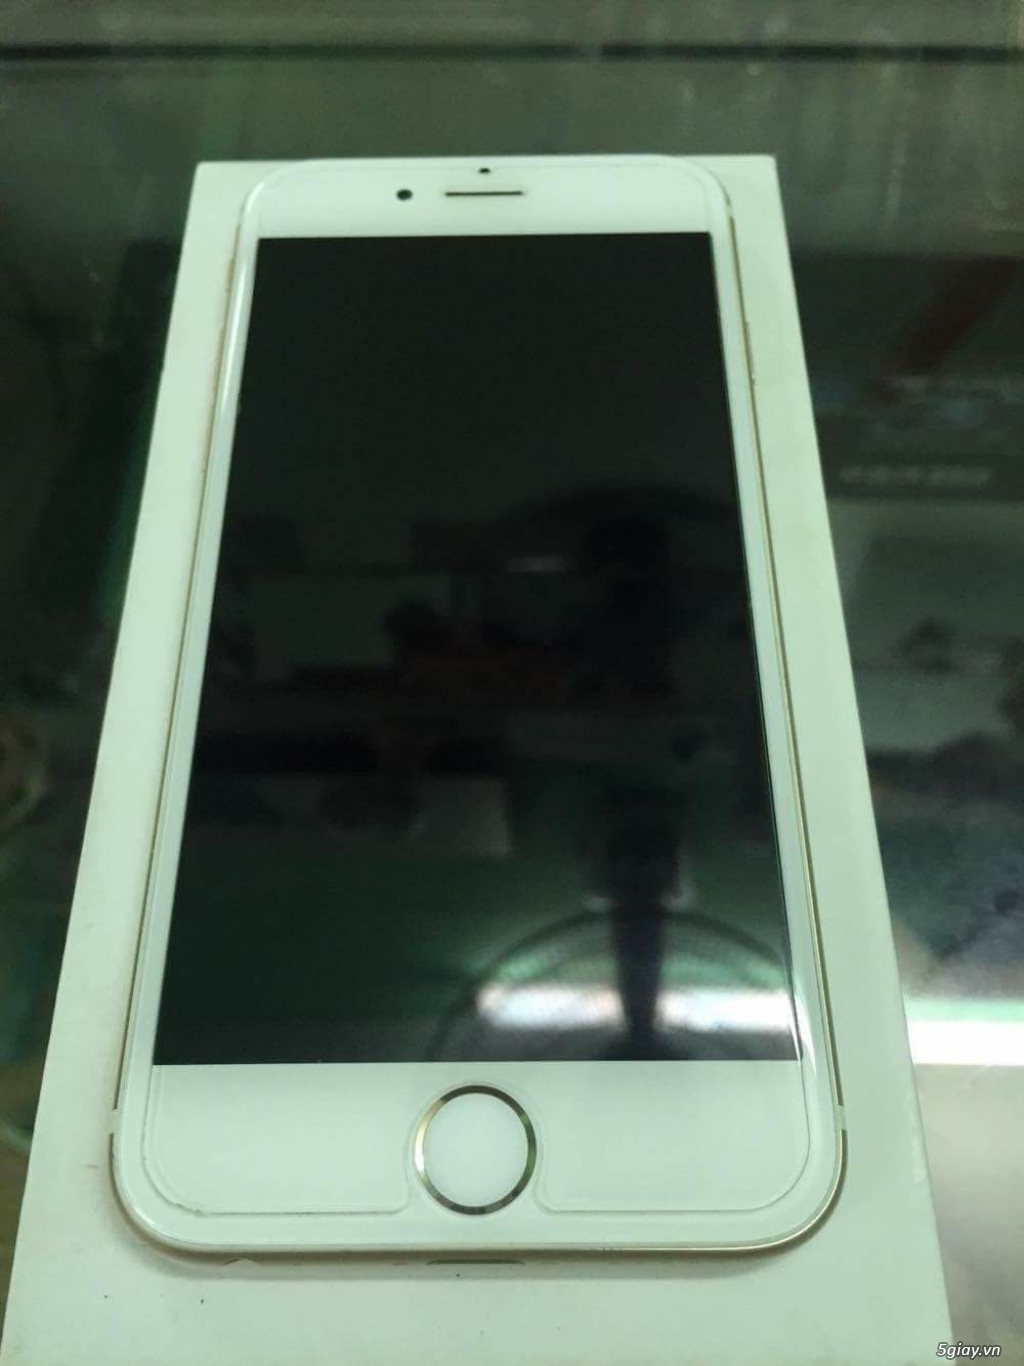 Iphone 6 Gold 16Gb nguyên zin - 1